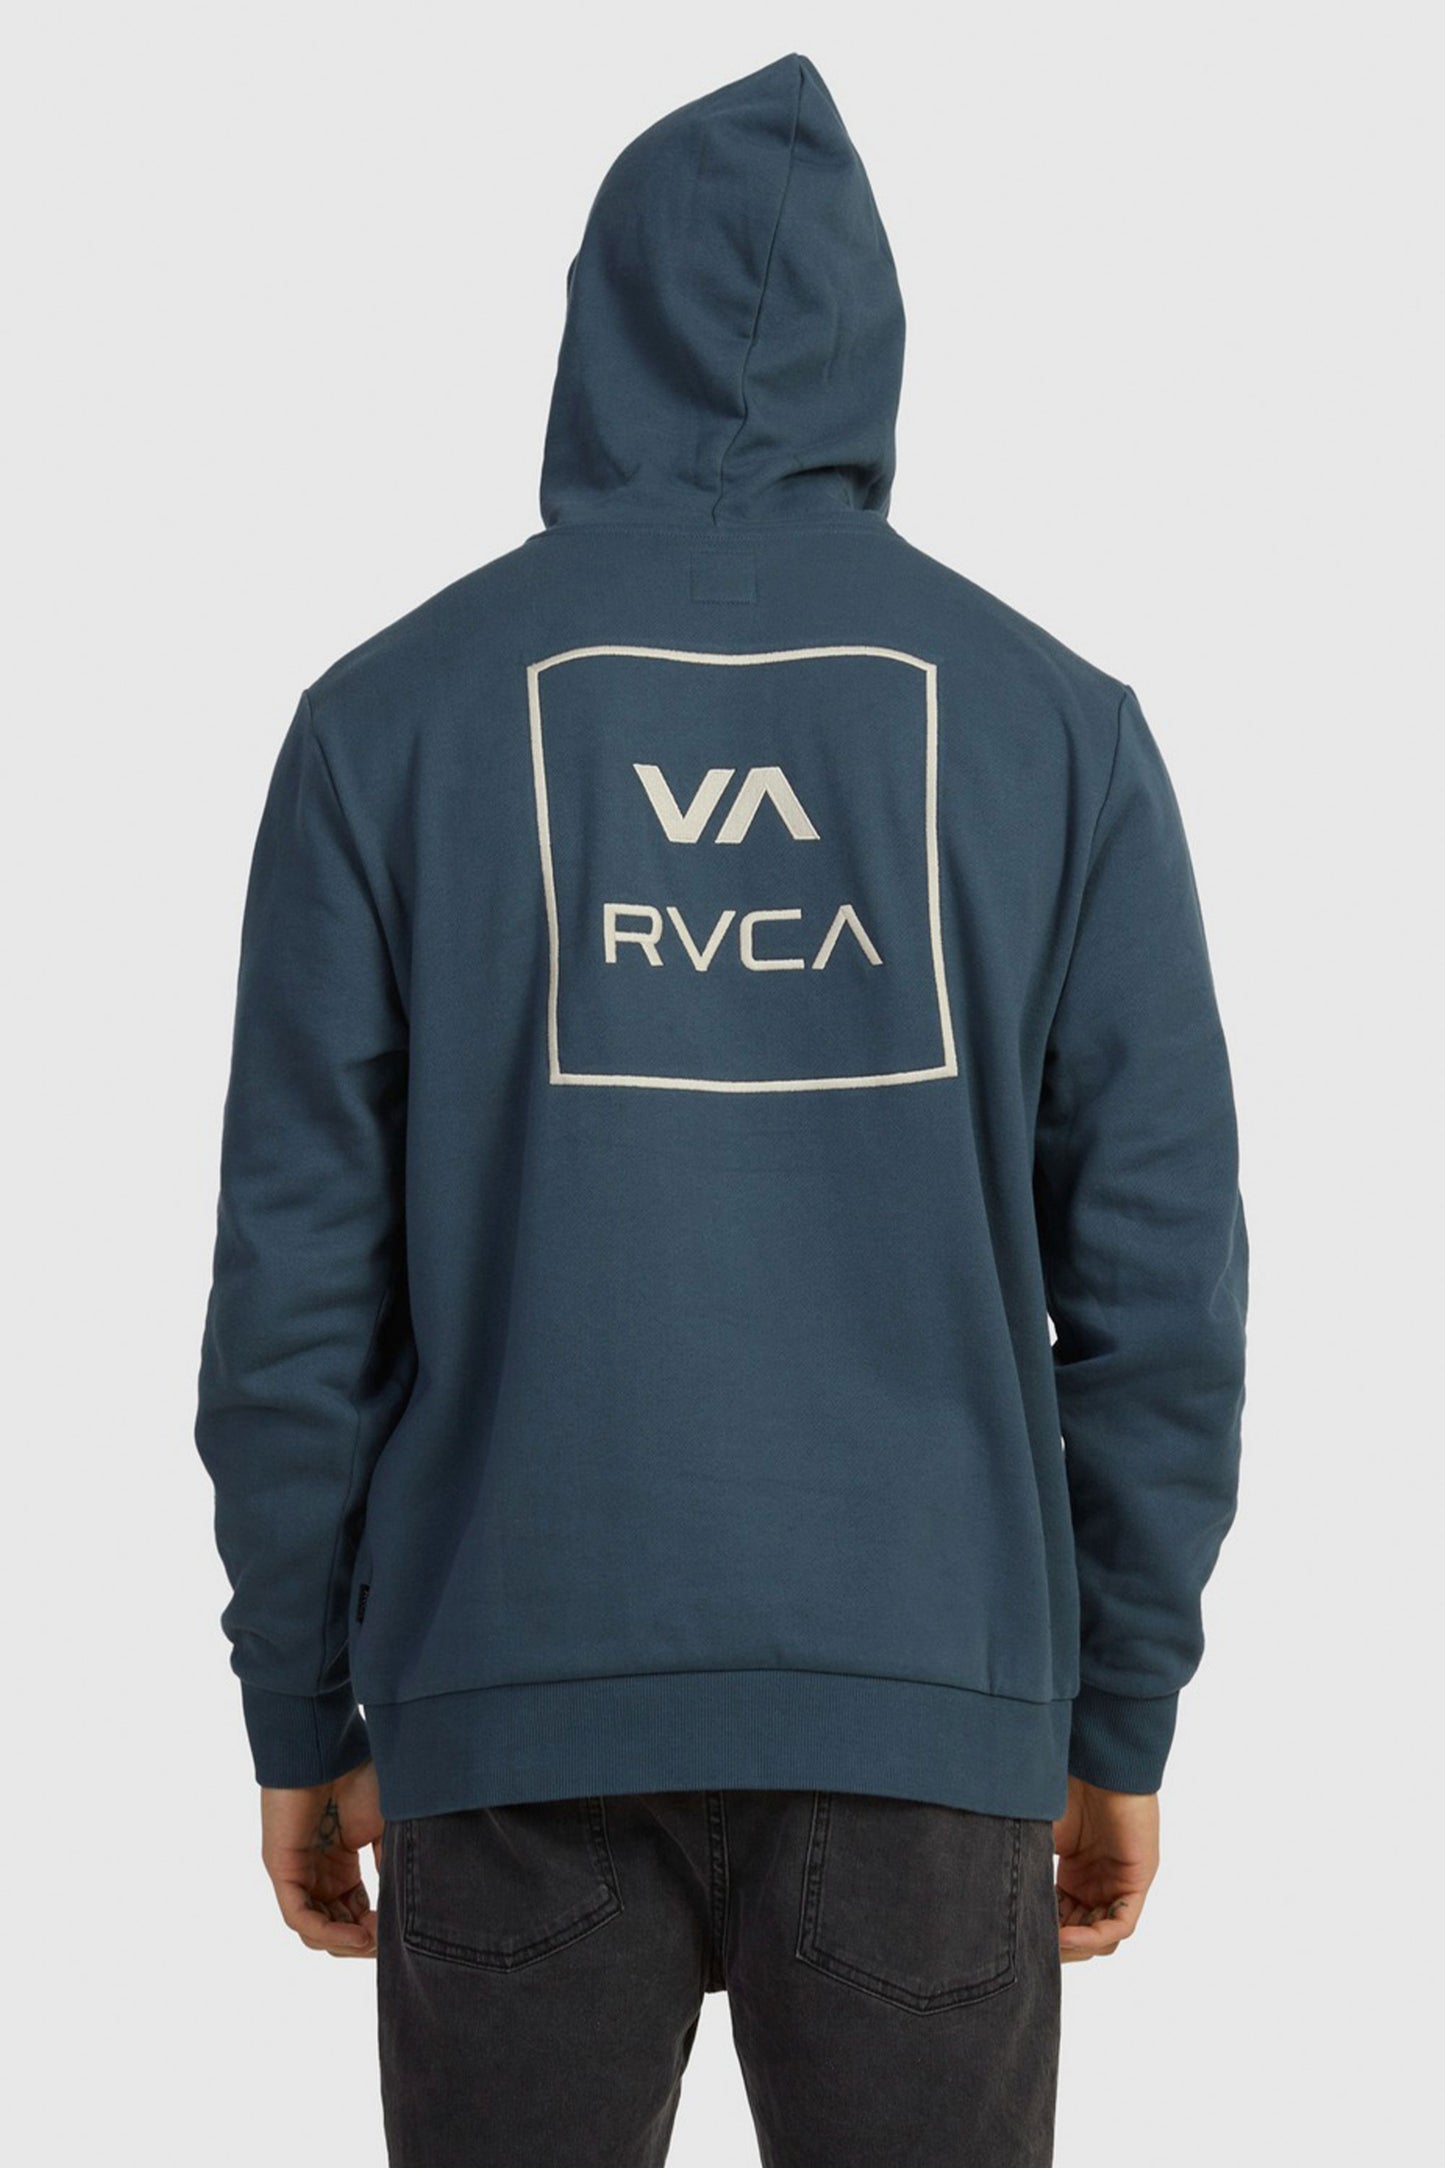     Pukas-Surf-Shop-RVCA-Sweater-Rvca-All-The-Way-dark-slate